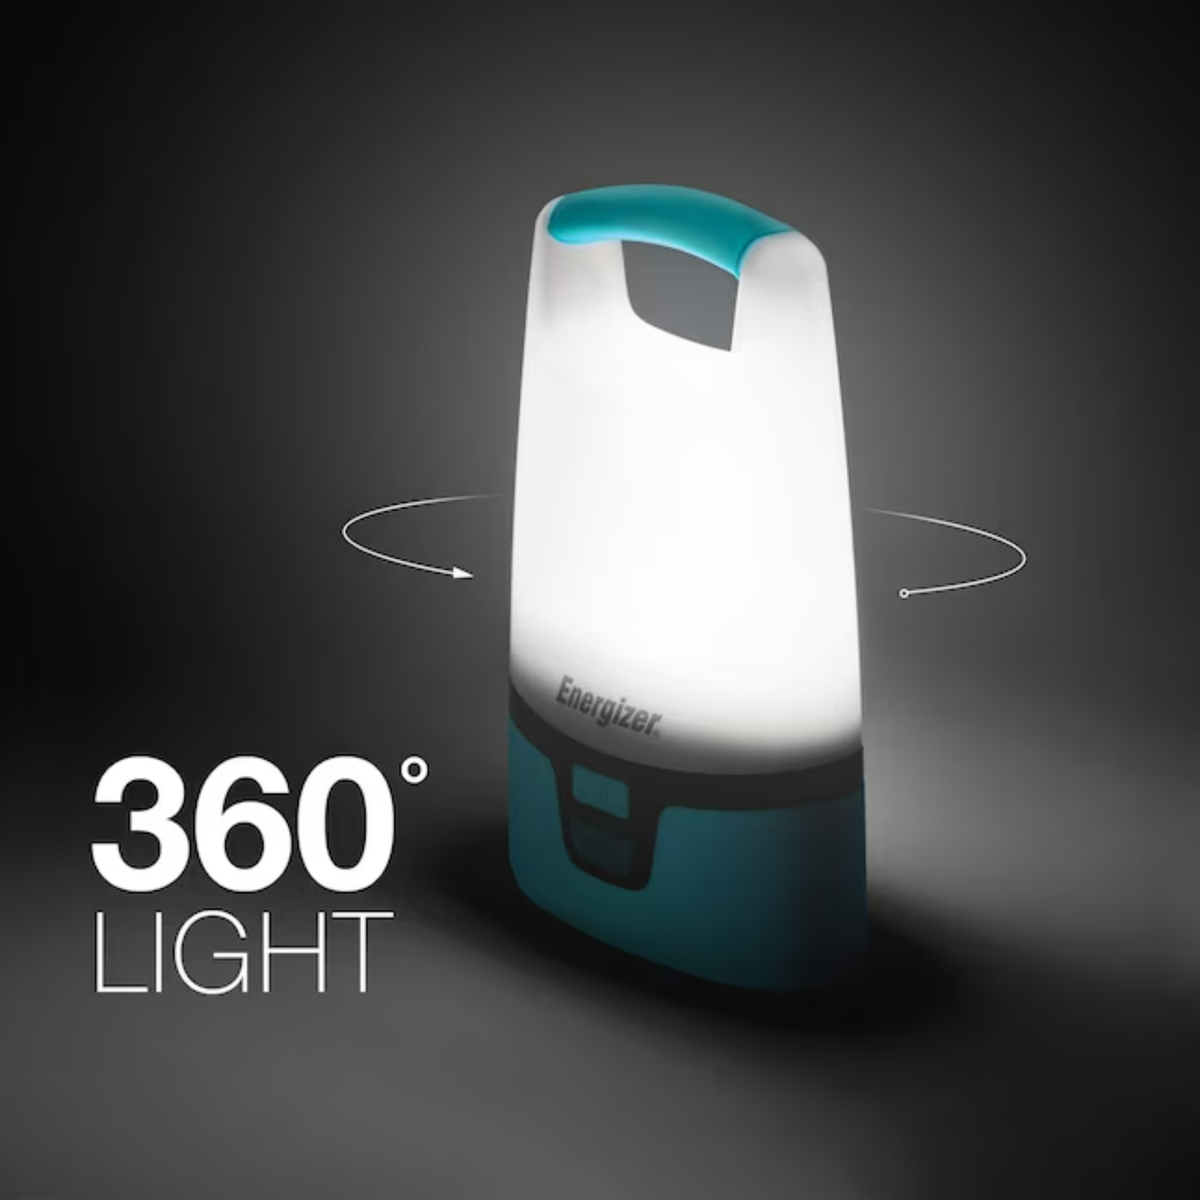 Energizer Hybrid Power 1200 lumens Rechargeable LED Lantern Light, ALUH28